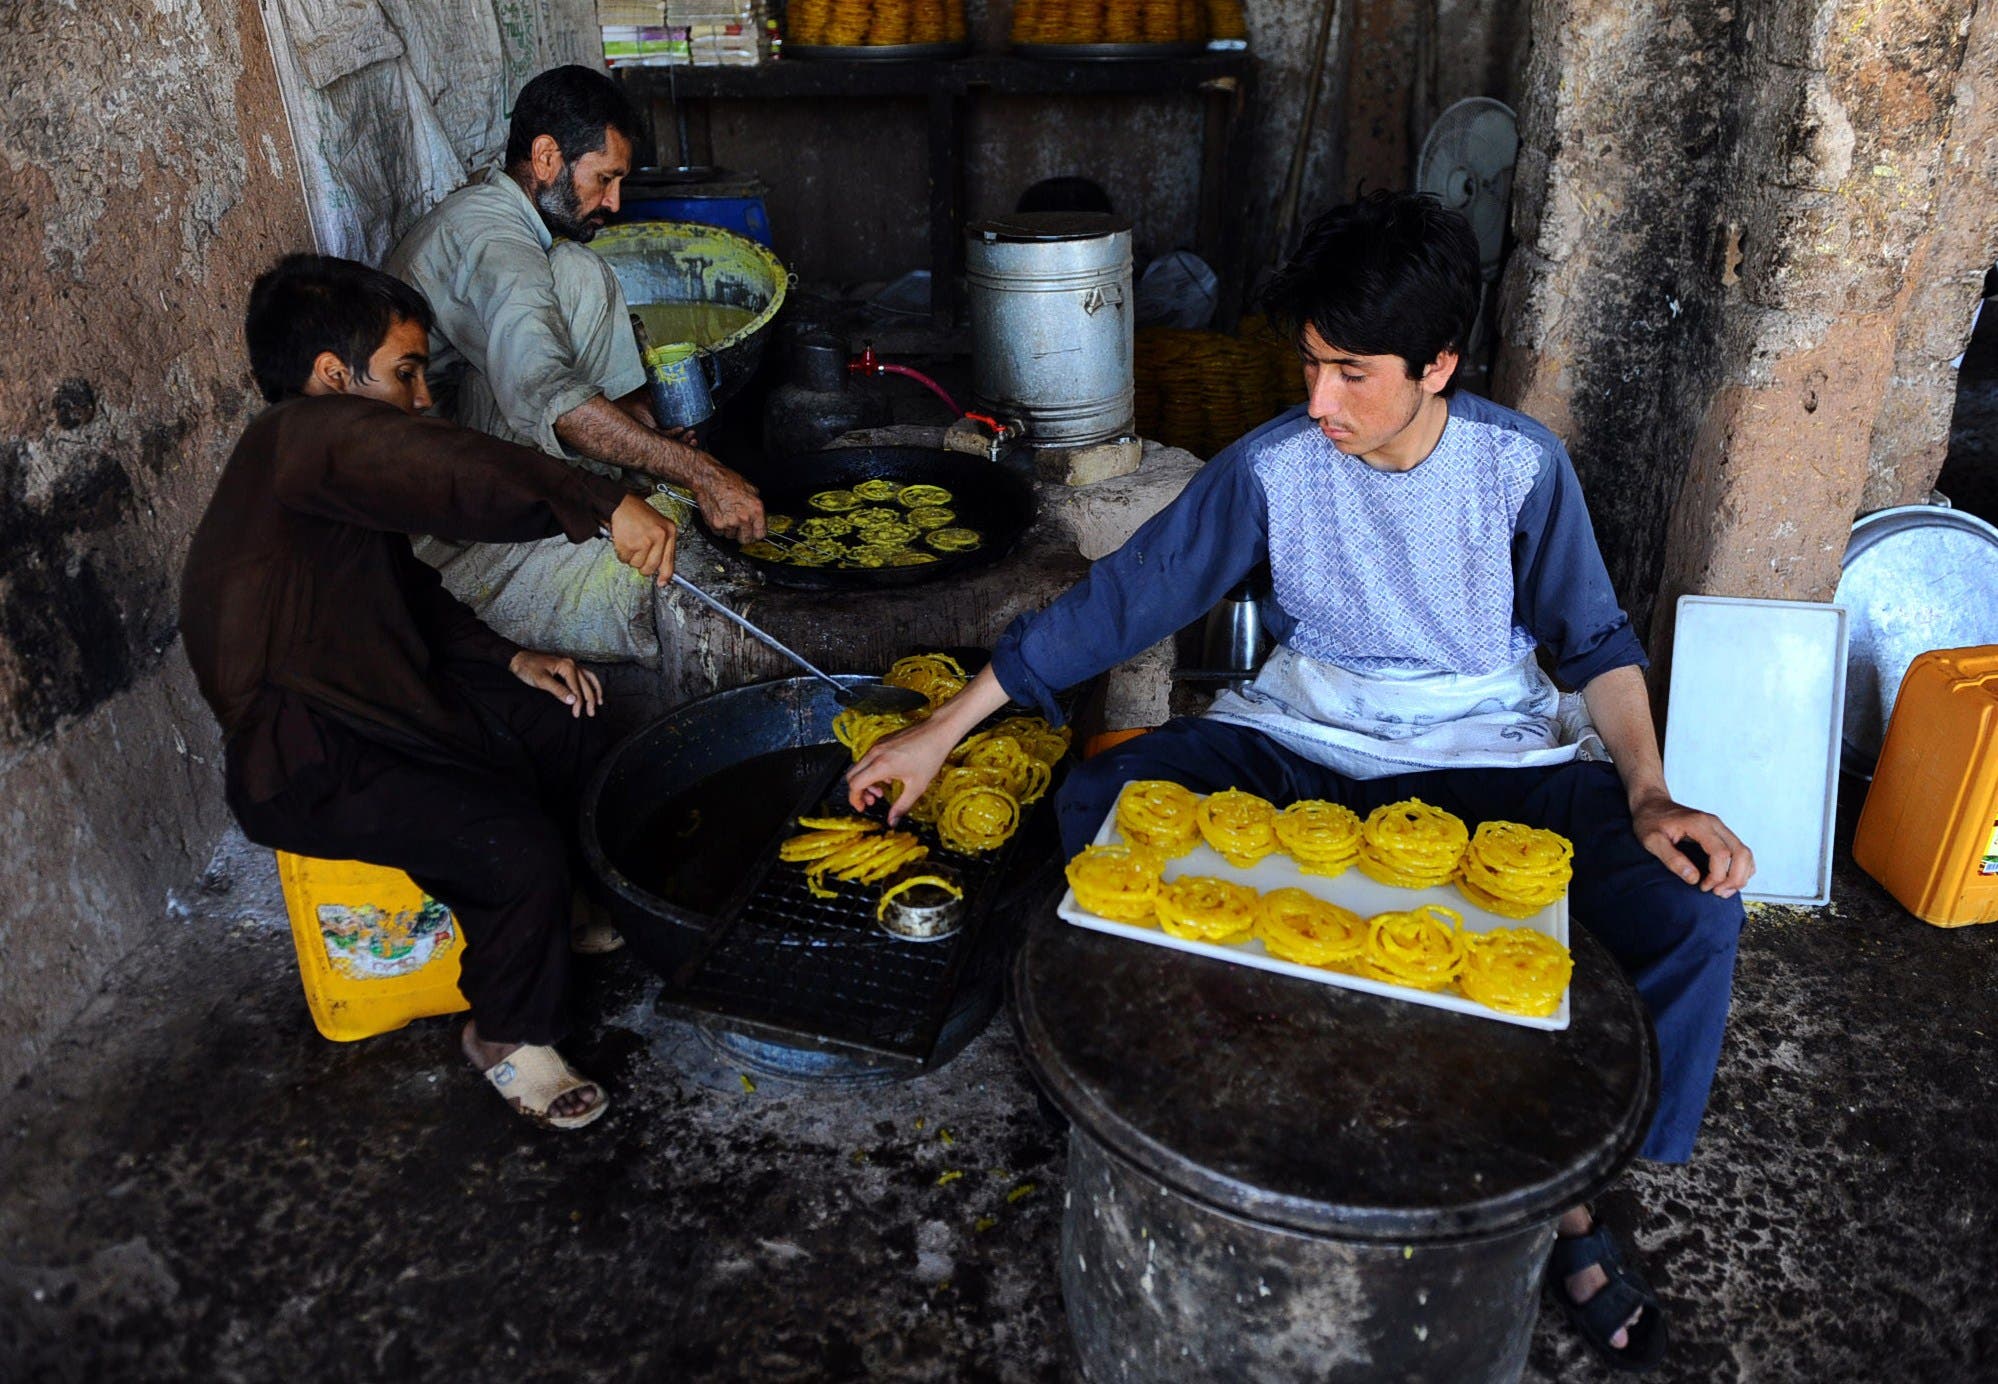 Afghanis cook up Ramadan treats